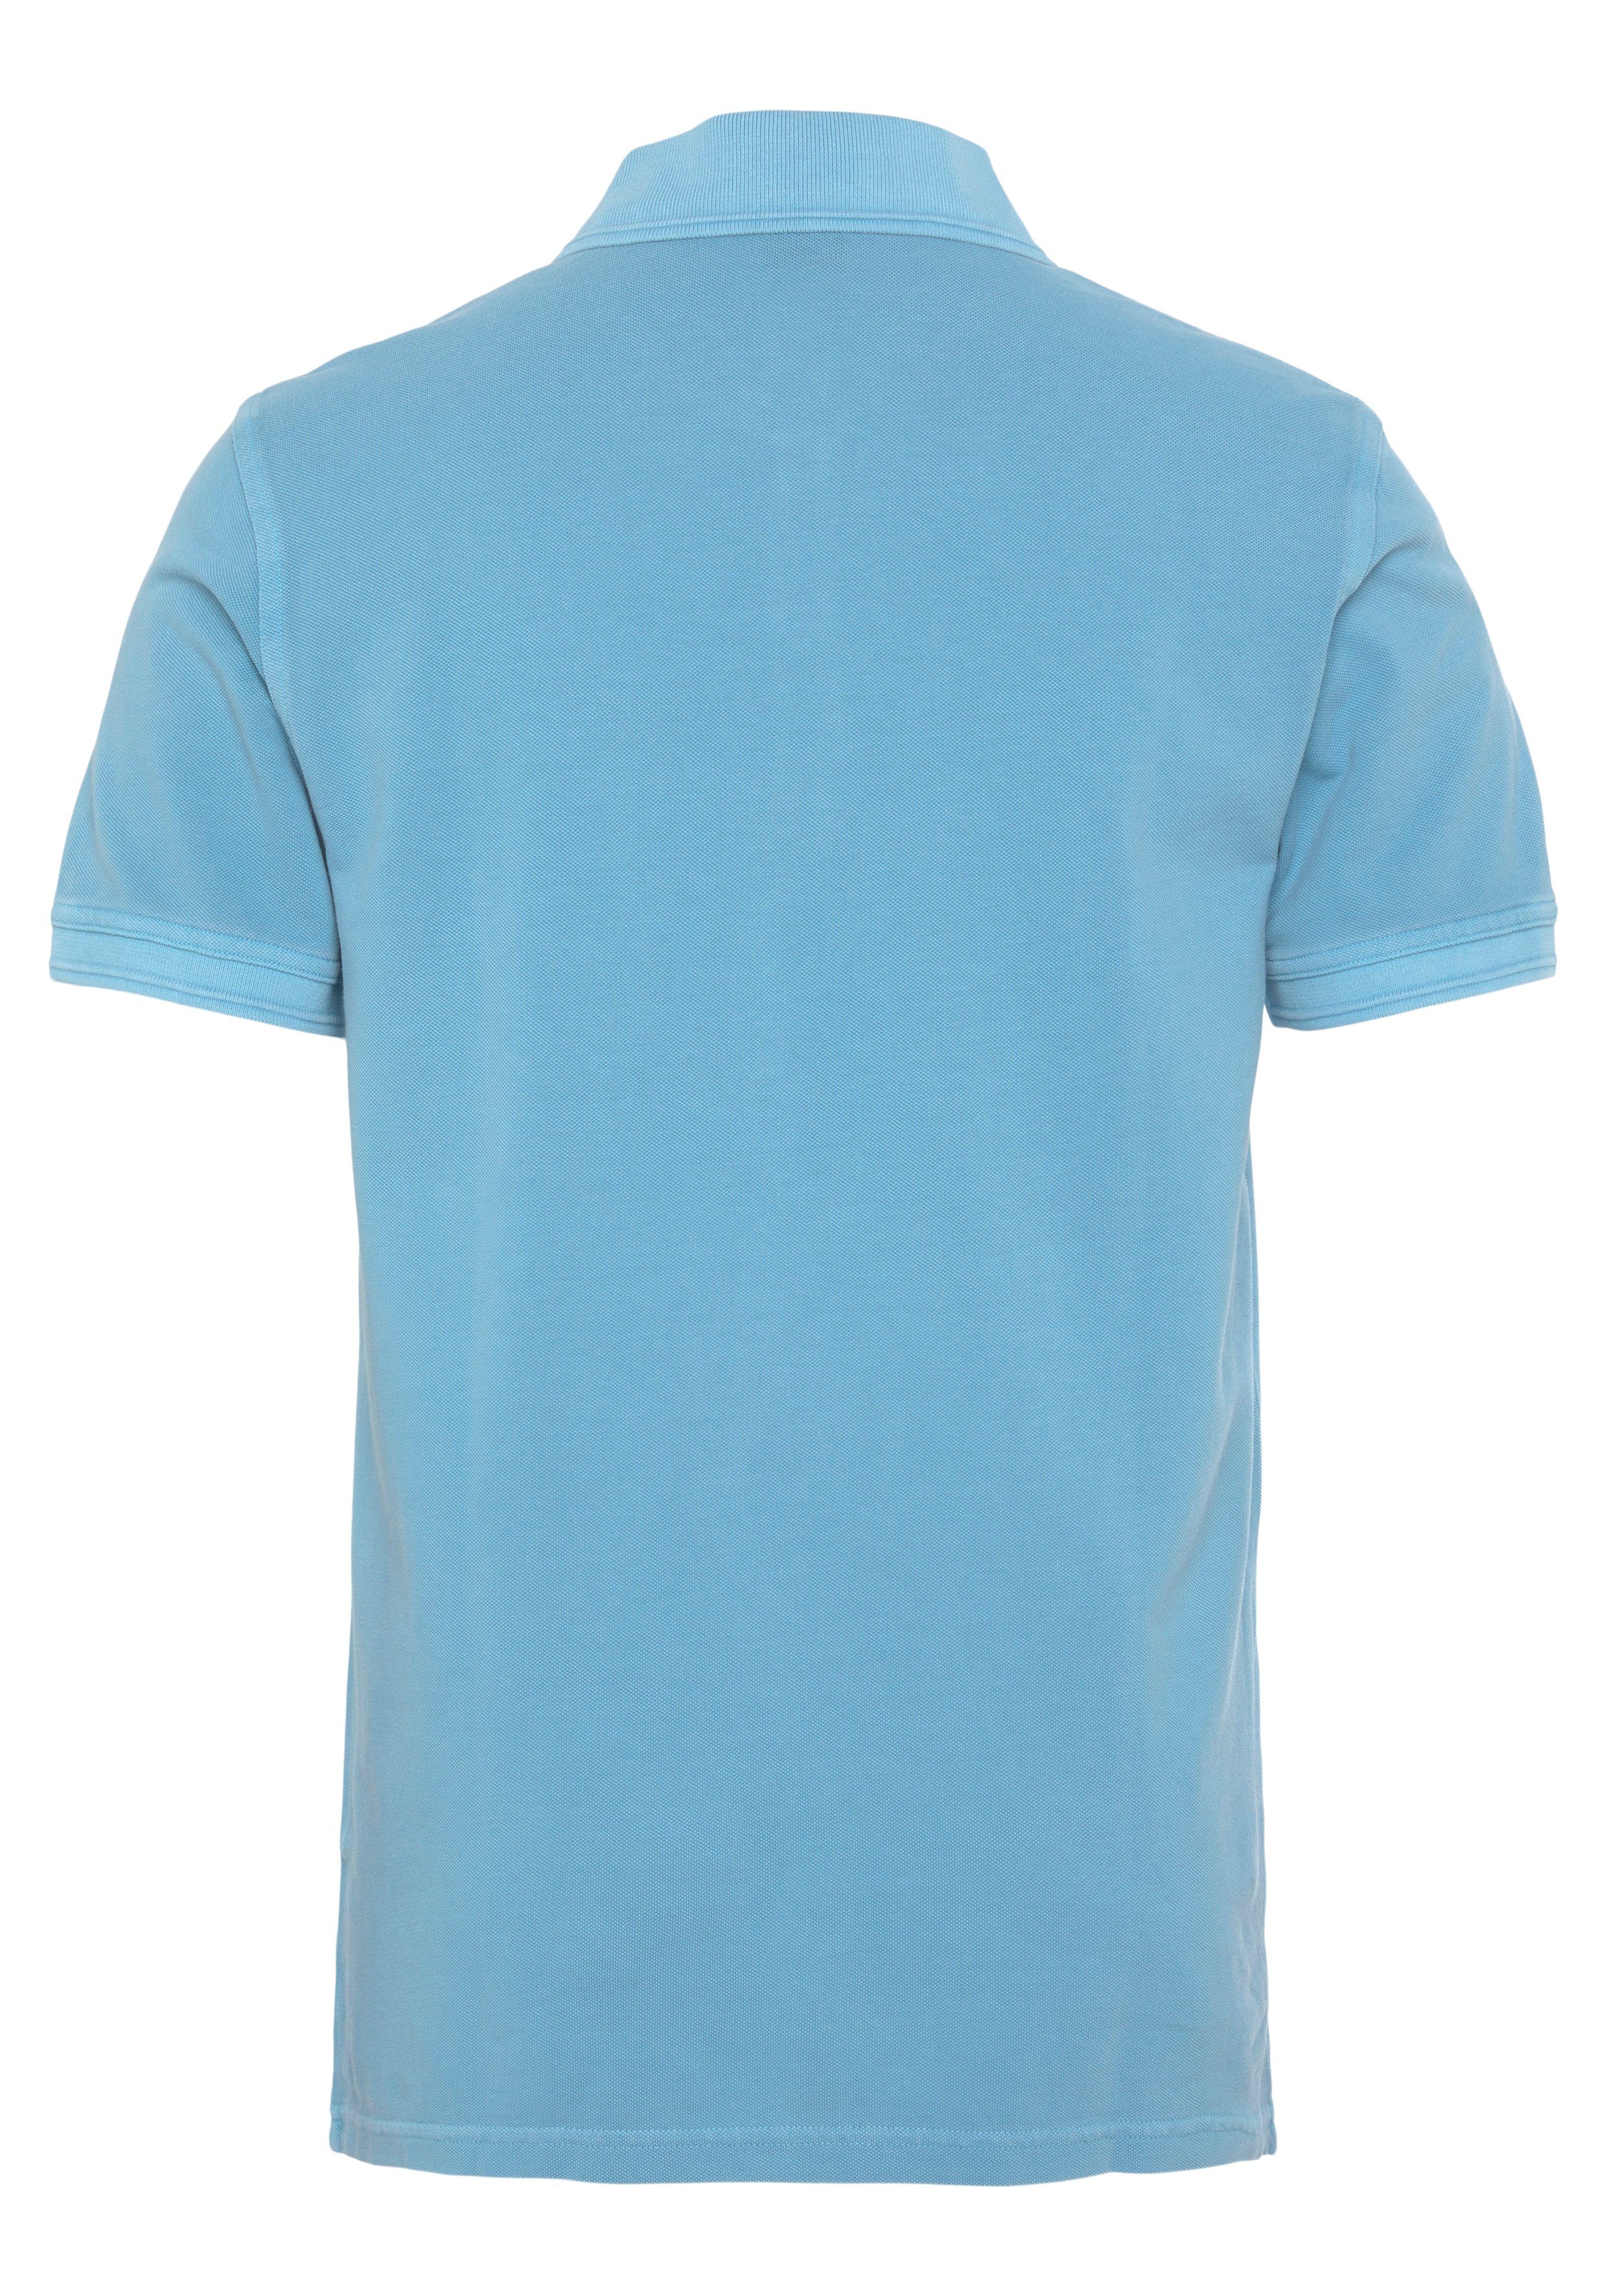 BOSS ORANGE Poloshirt Logoschriftzug 01 dezentem der 10203439 auf Blue2 Brust Open mit Prime